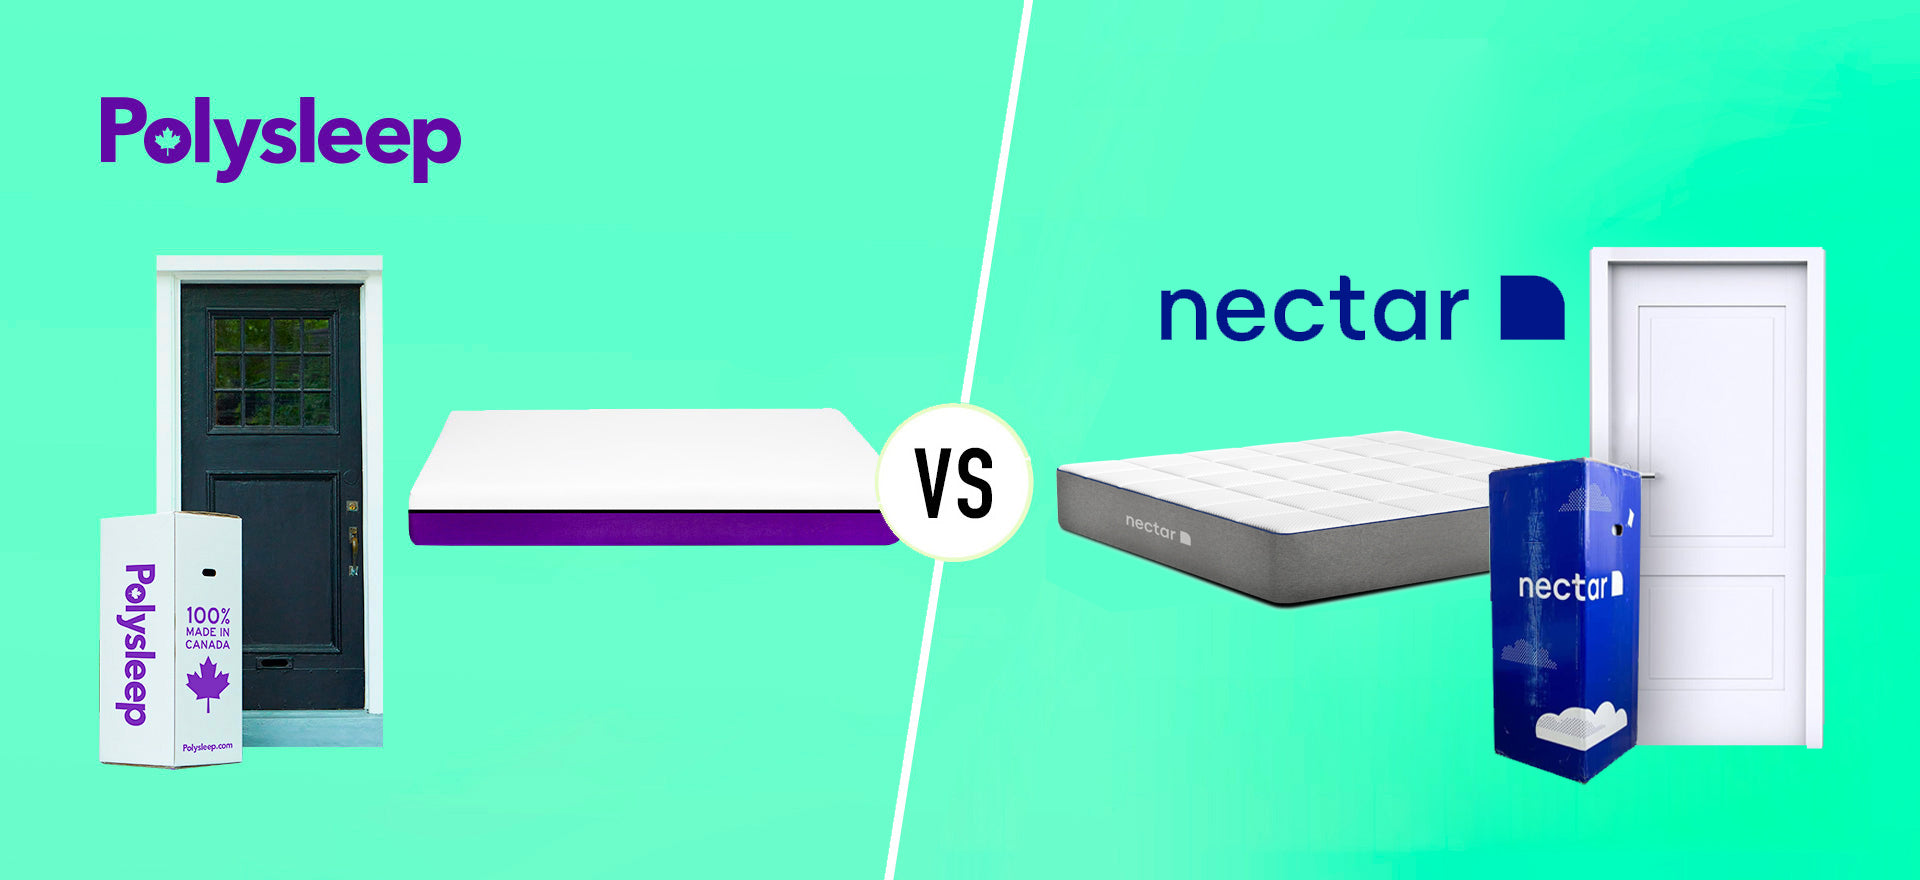 Comparison between the Nectar mattress and the Polysleep mattress